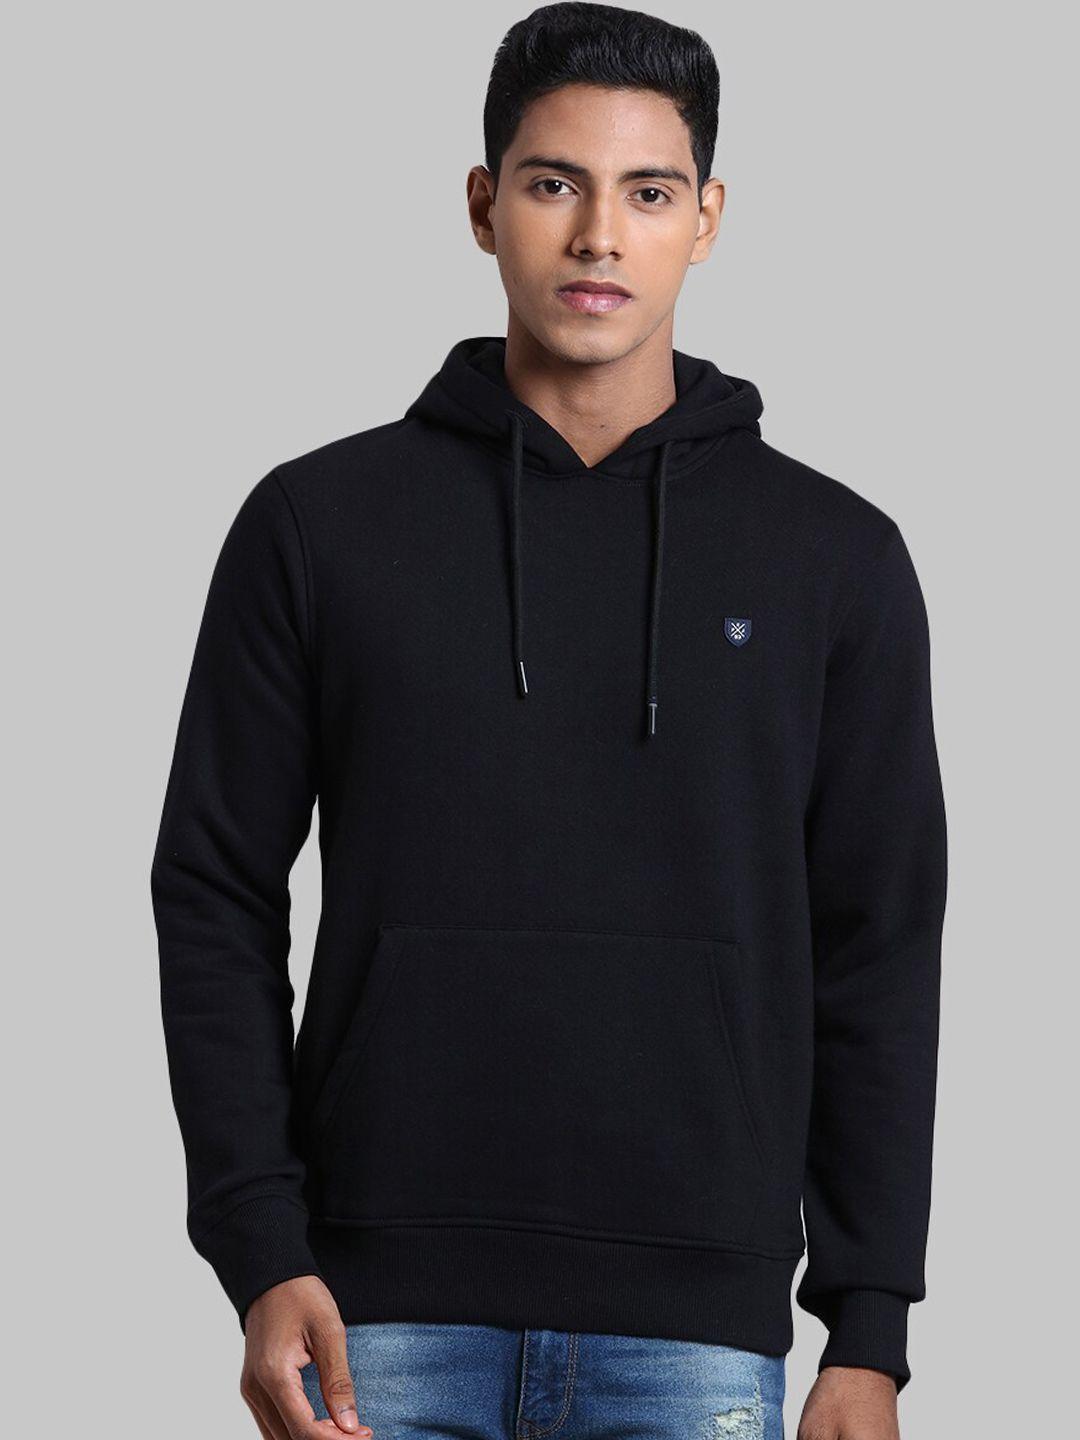 colorplus-men-black-sweatshirt